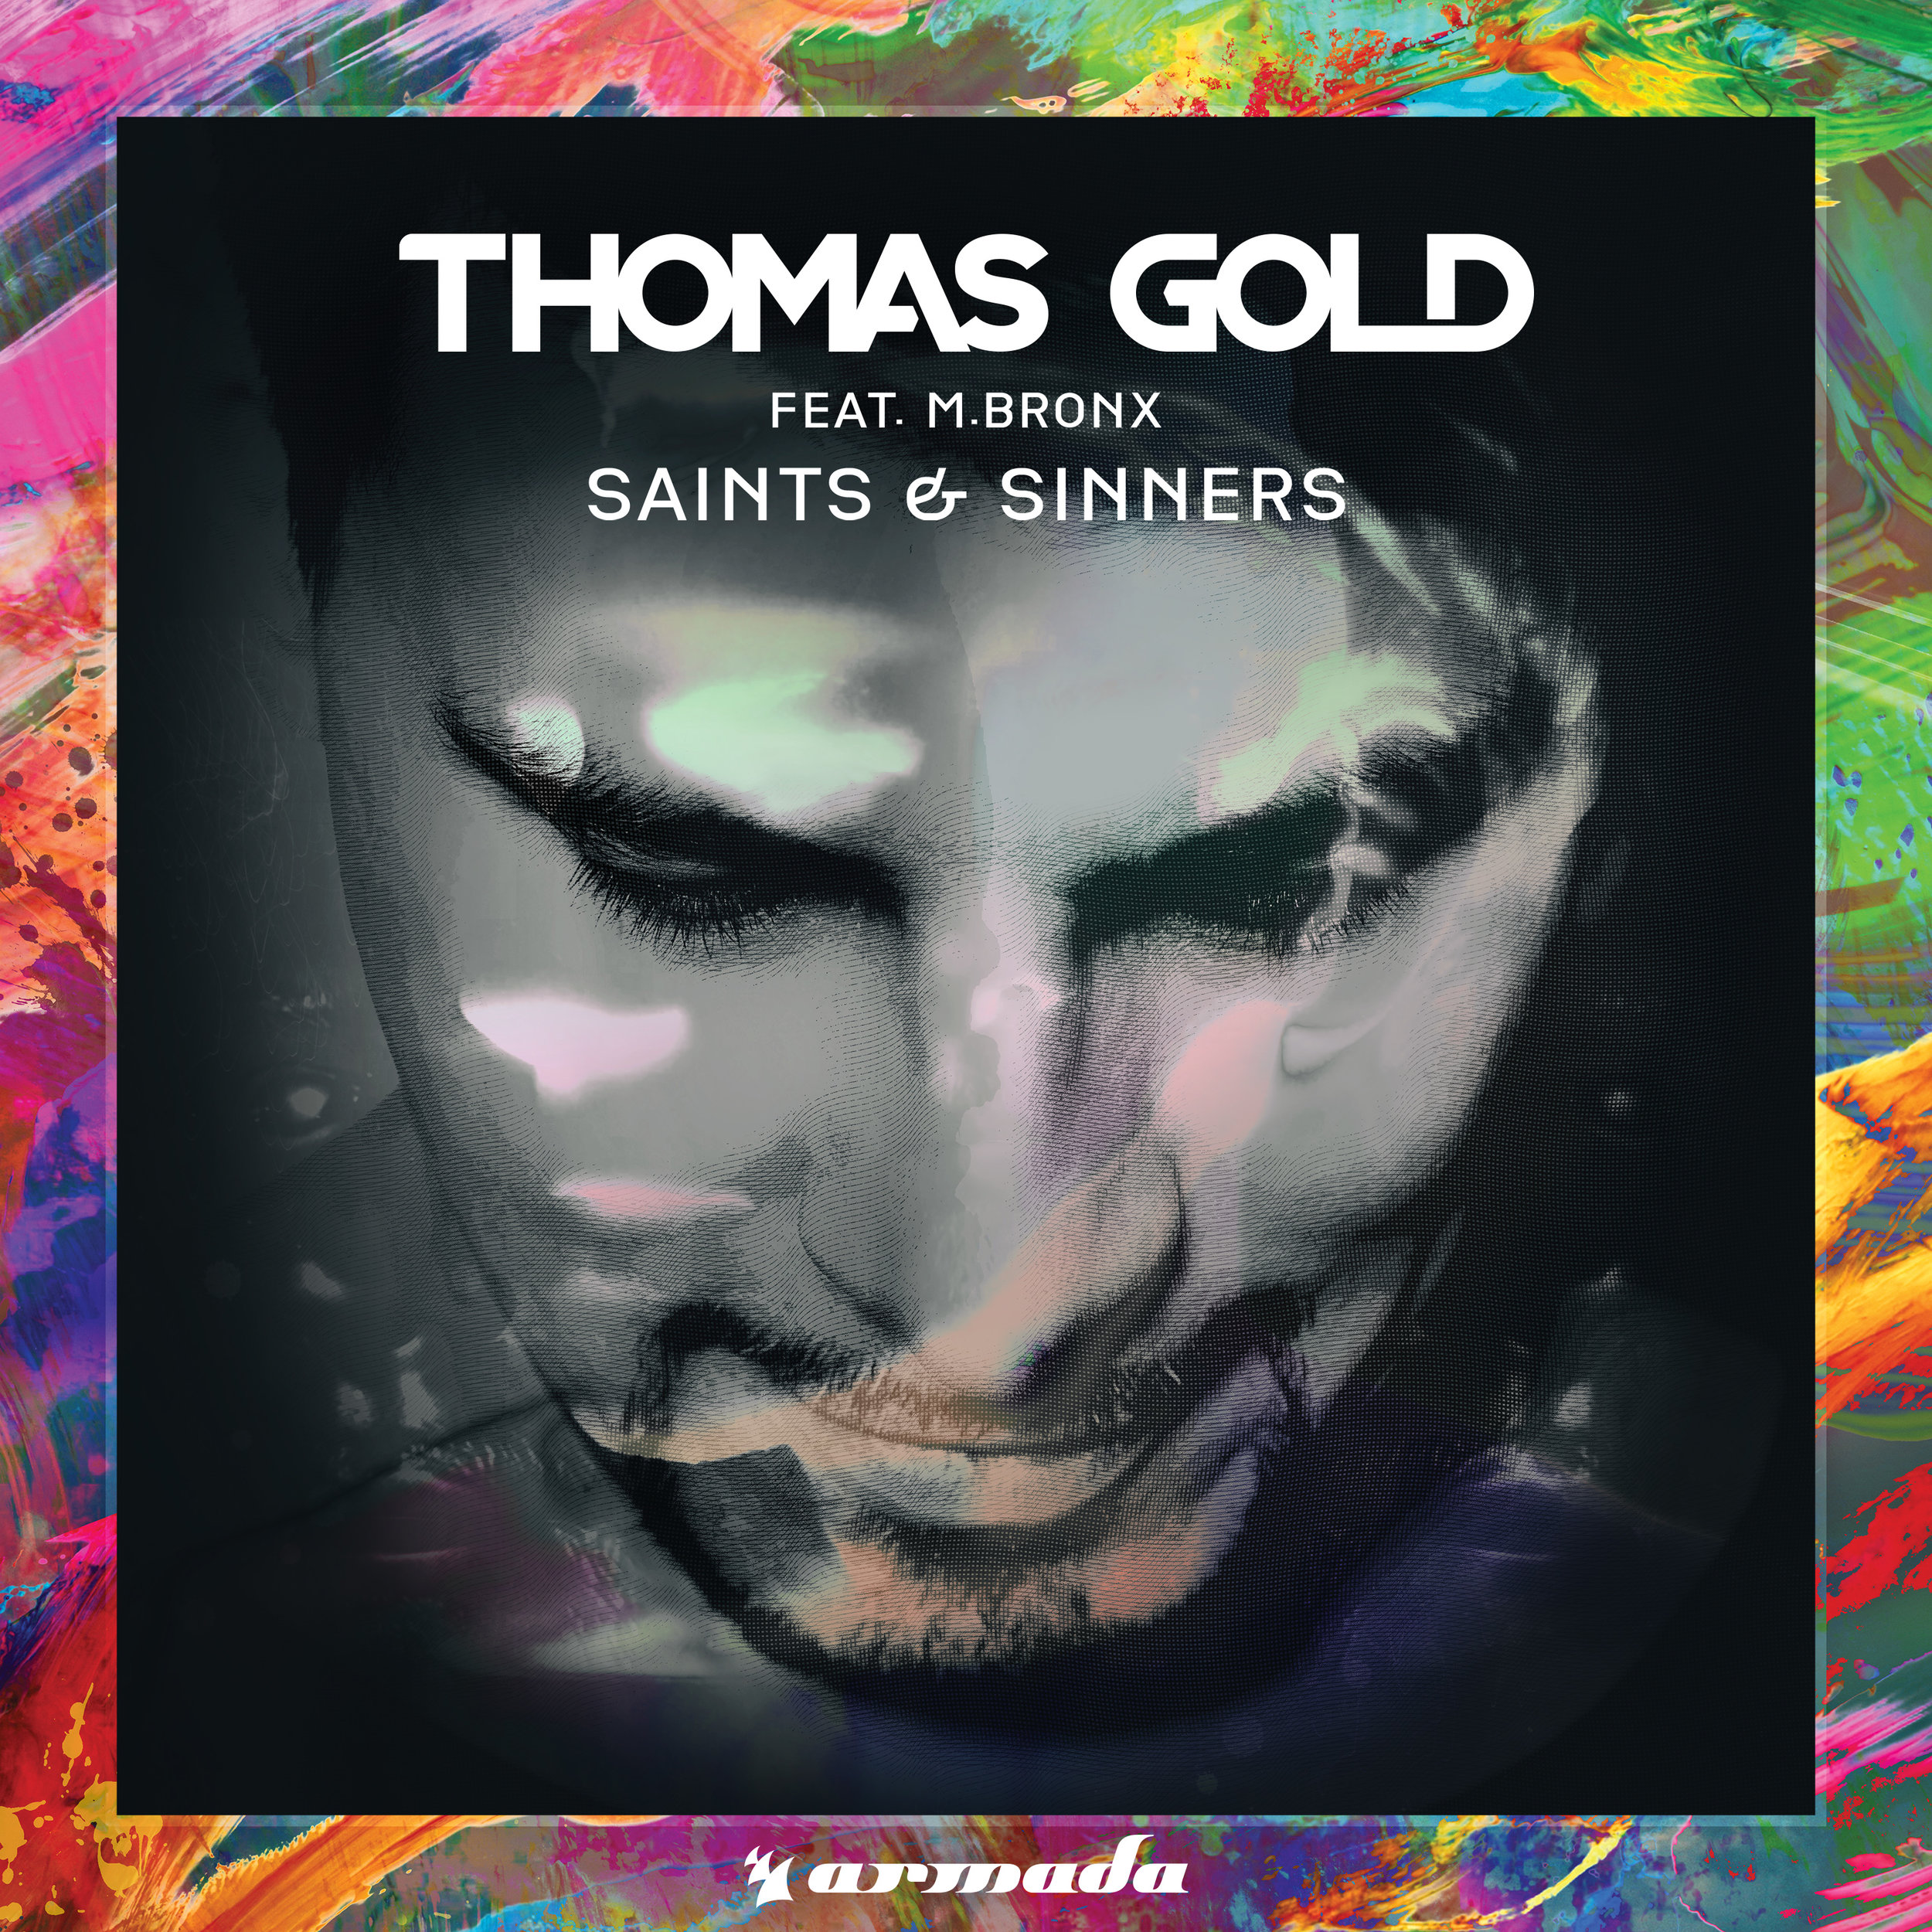 THOMAS GOLD–"Saints & Sinners"